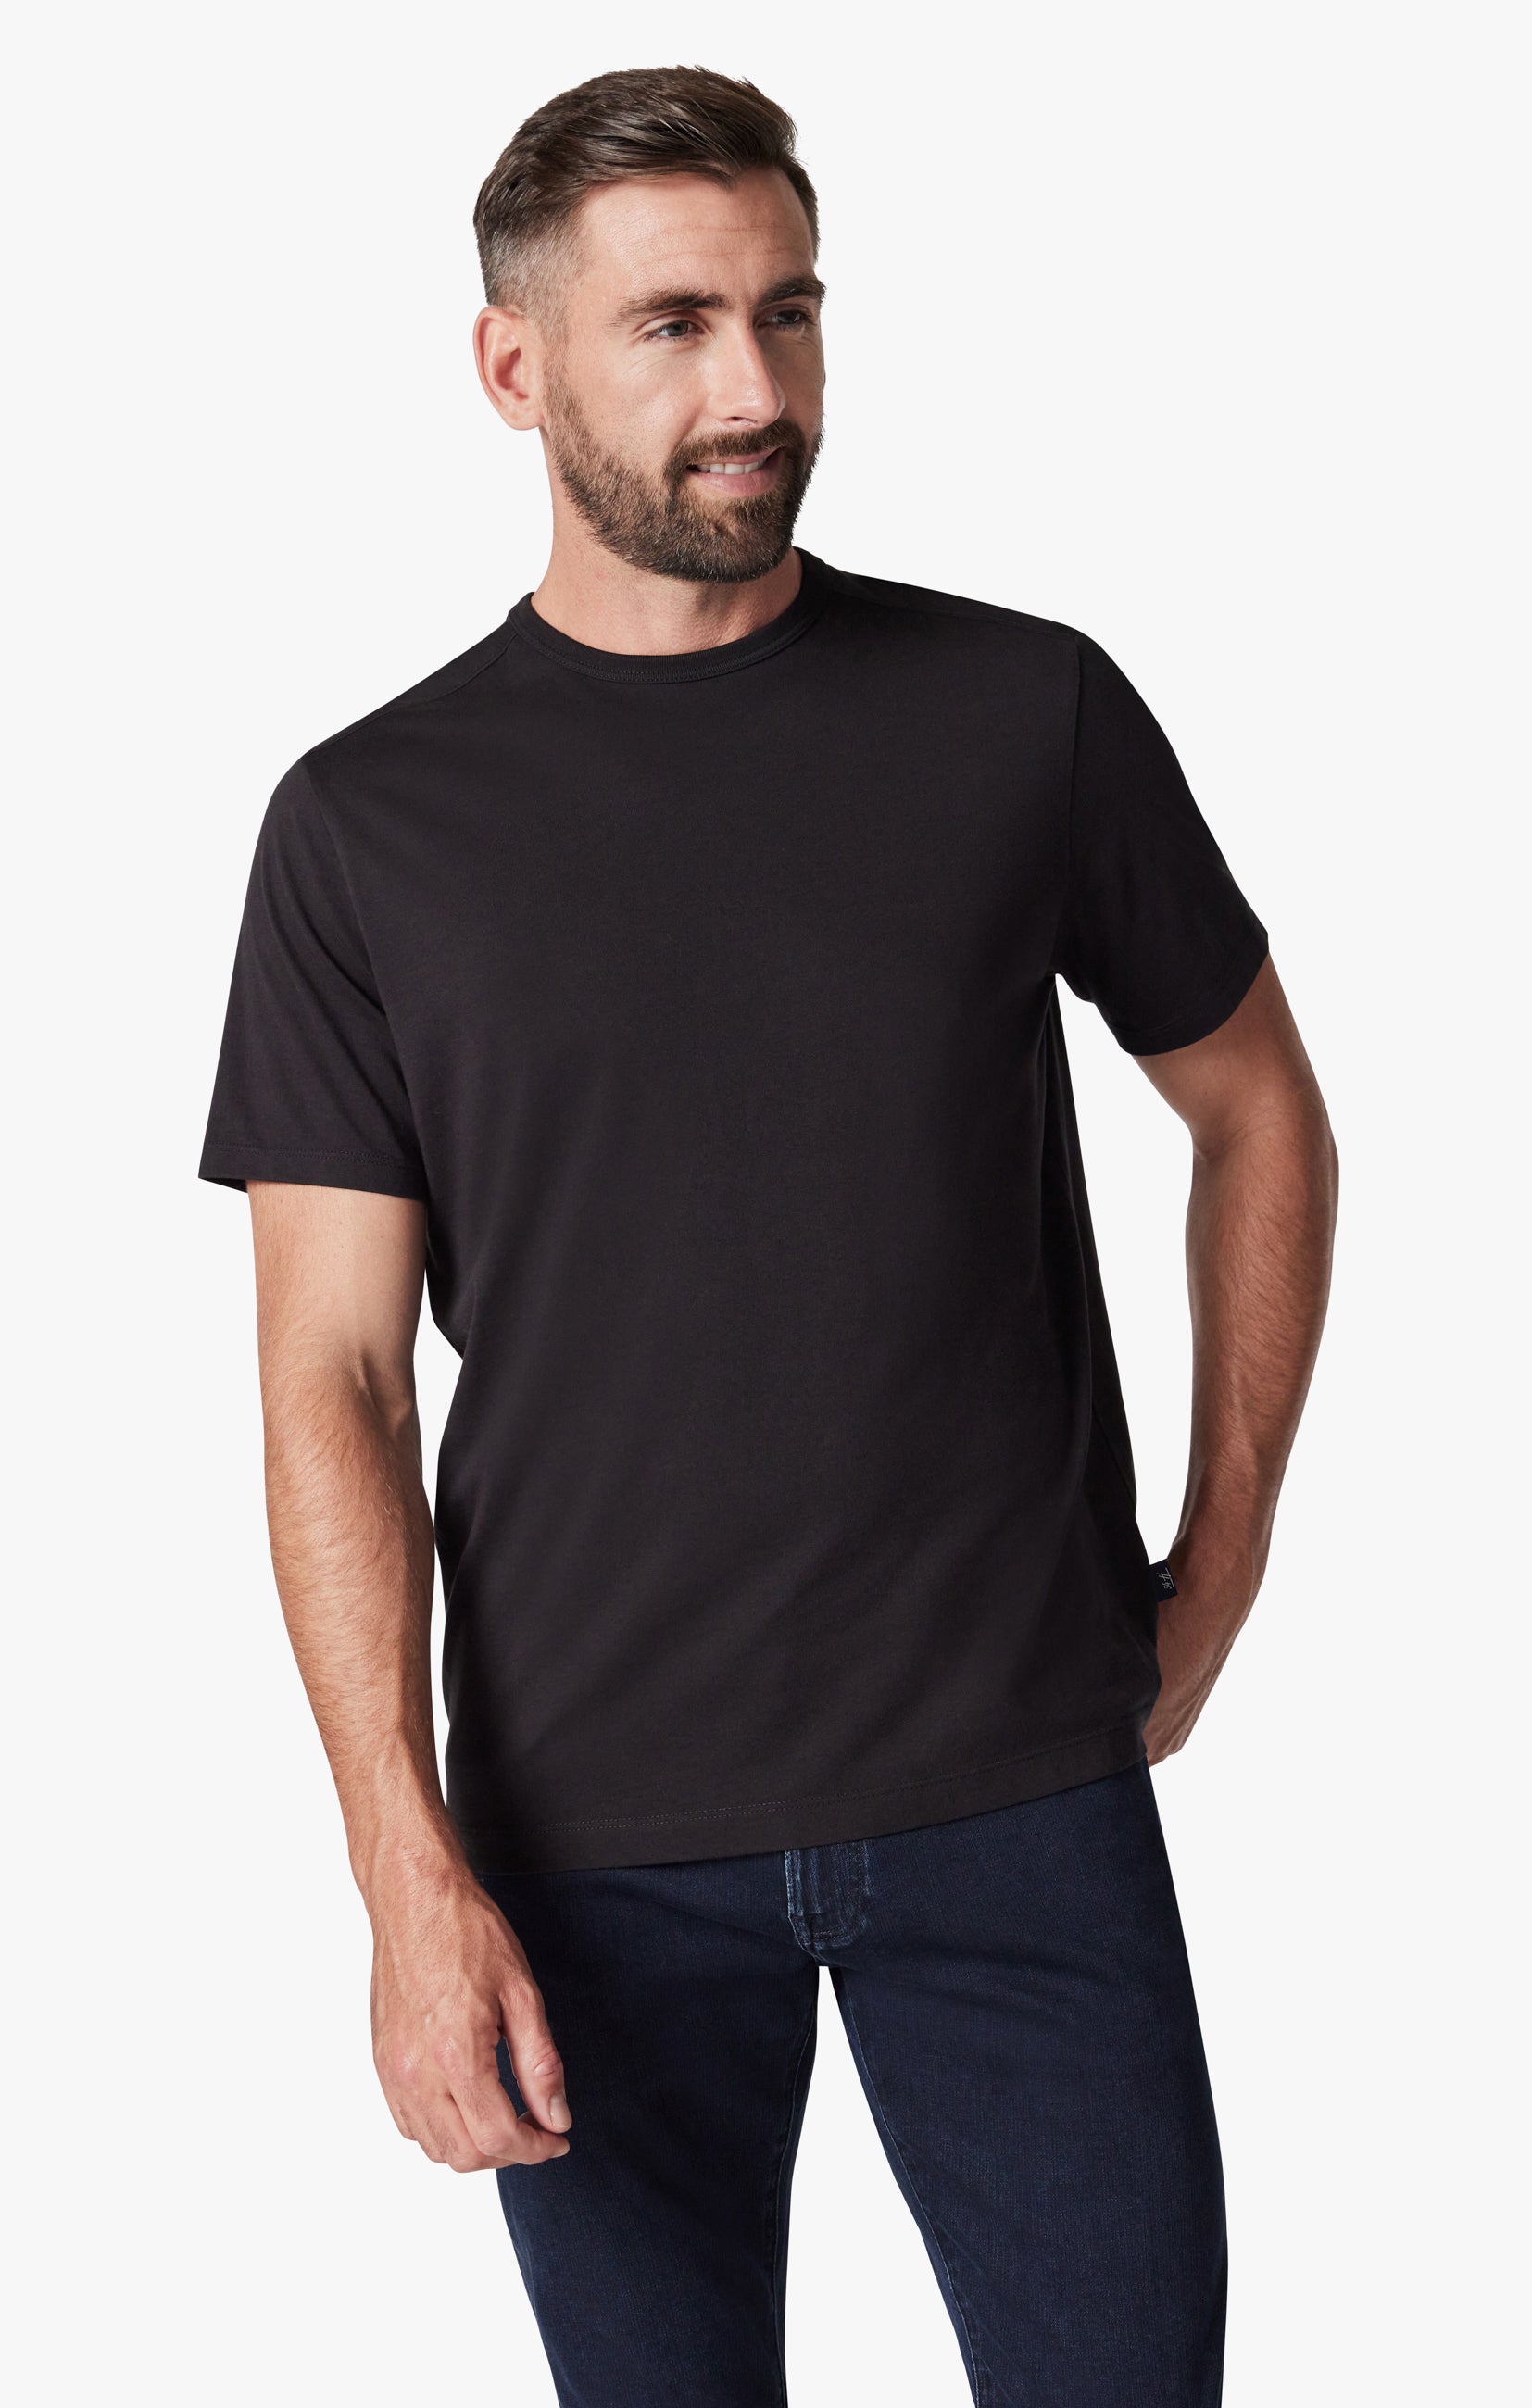 Basic Crew Neck T-Shirt in Black Image 2